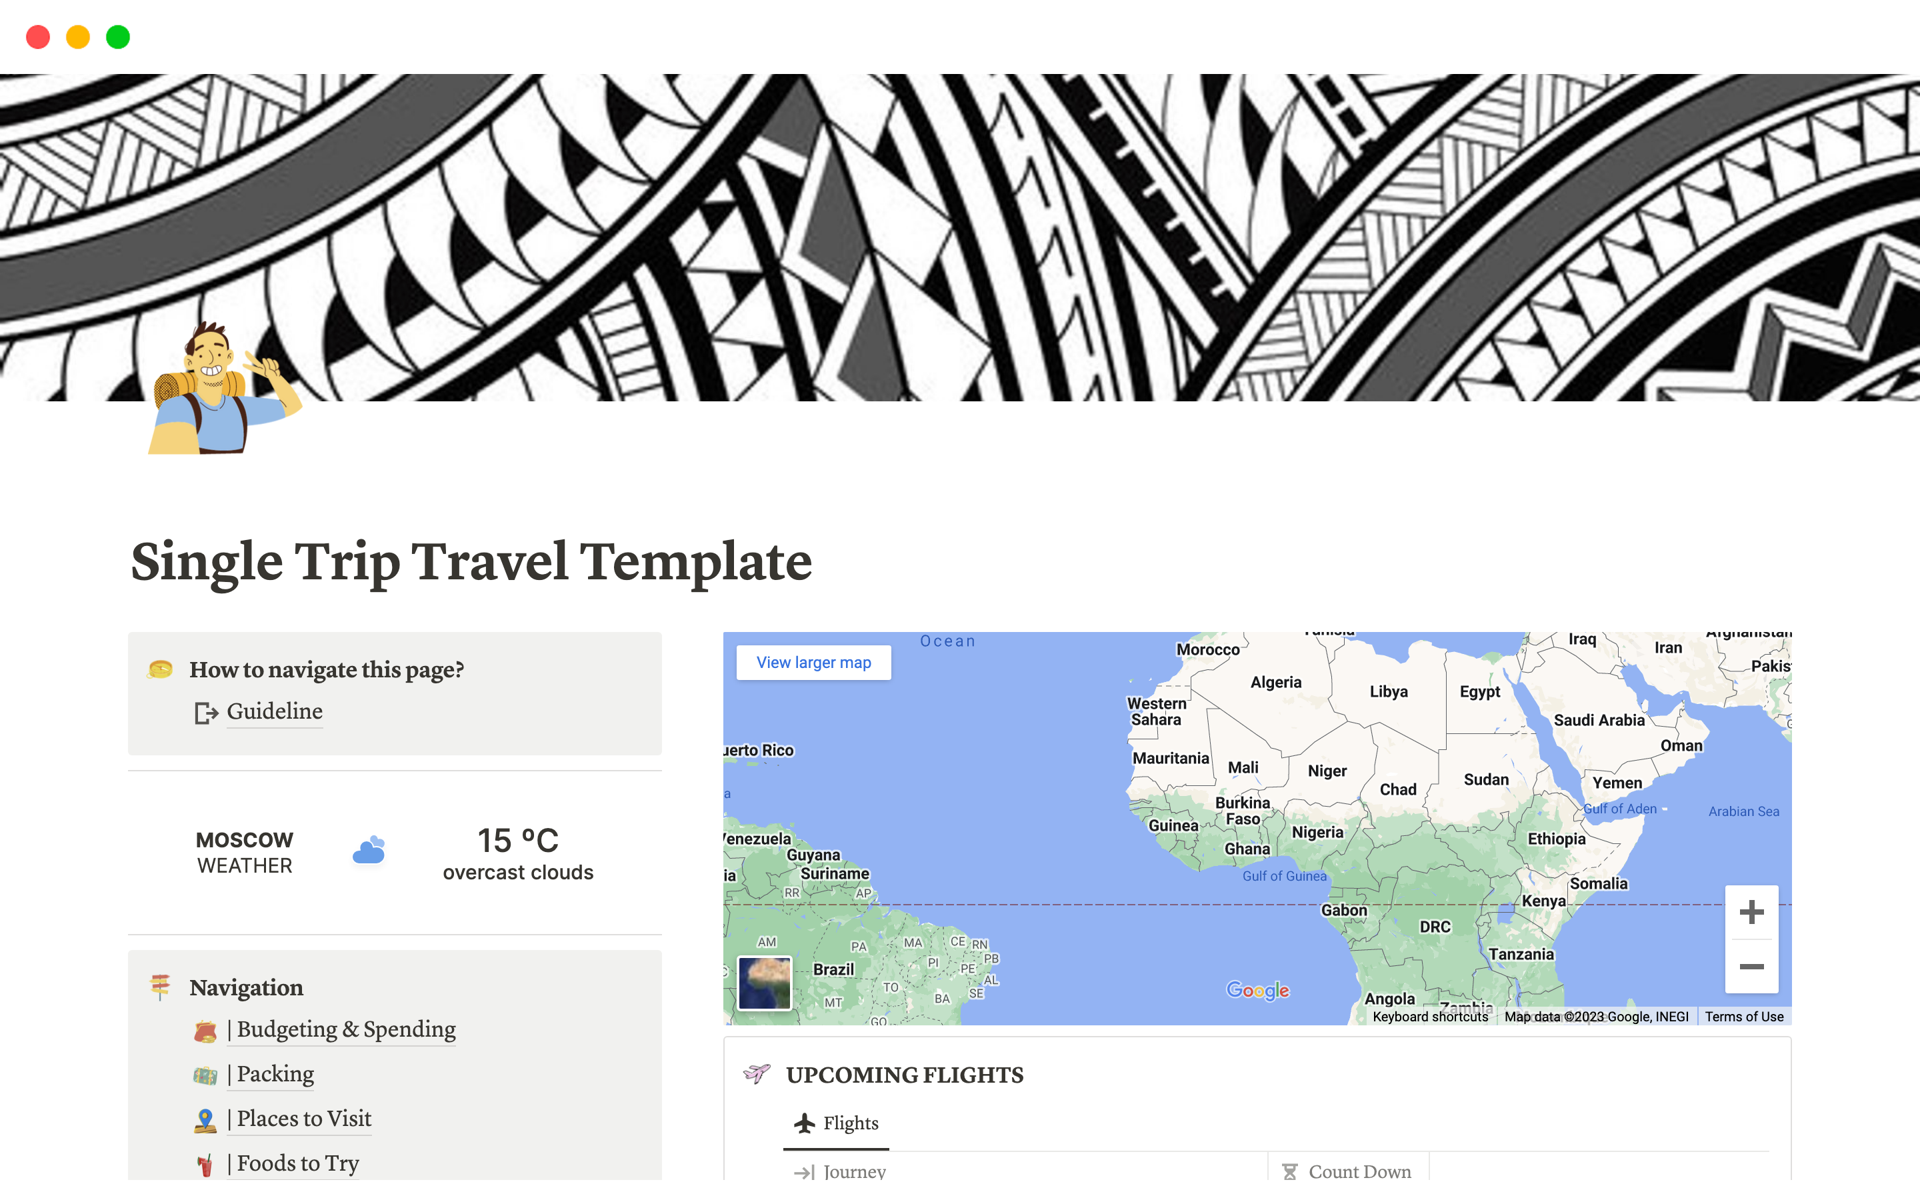 Vista previa de una plantilla para Travel Template : Planner for Single Trip Journey